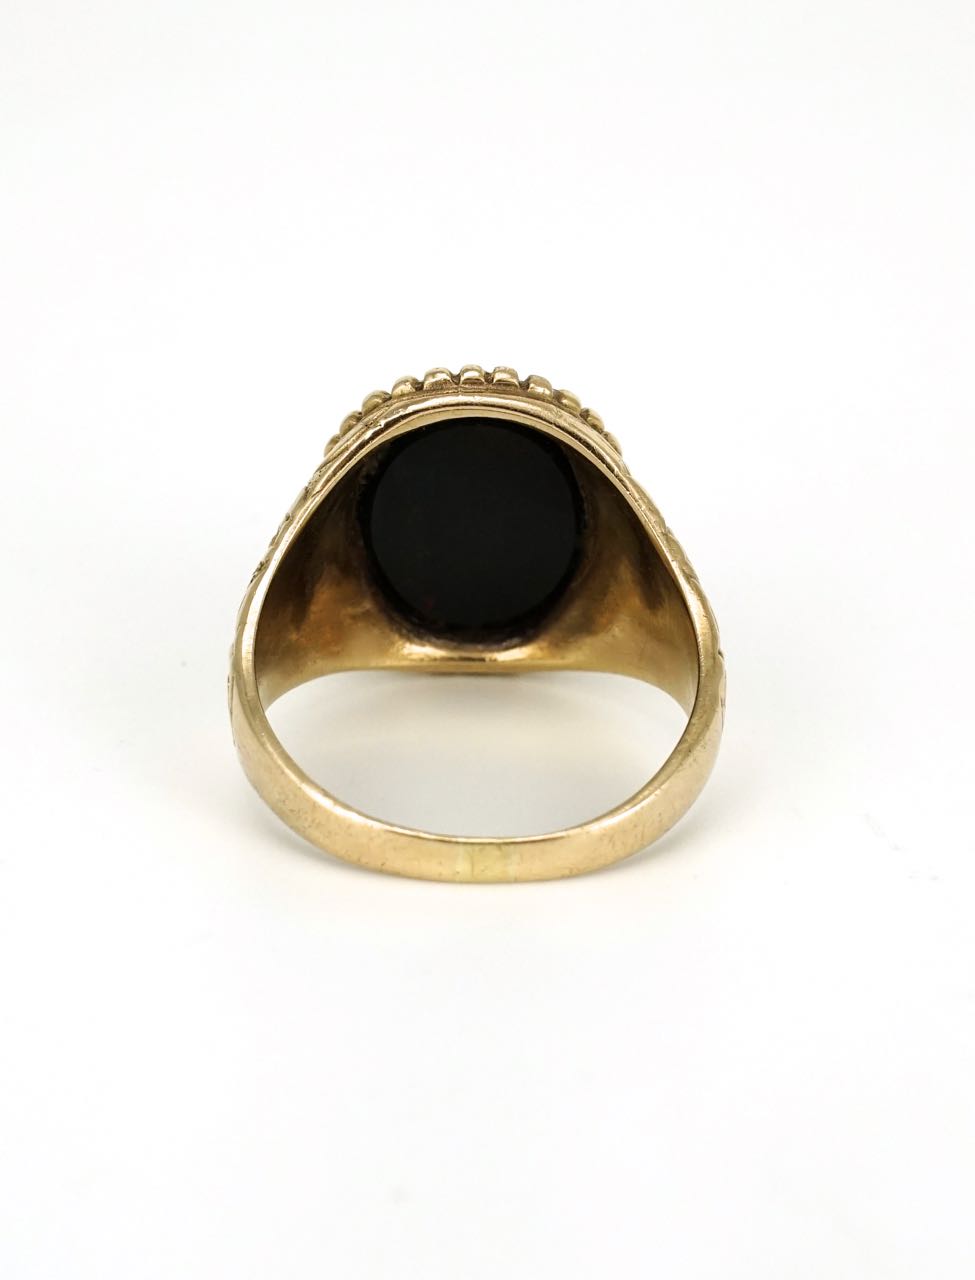 Men's oval 9k gold bloodstone signet ring 1970s